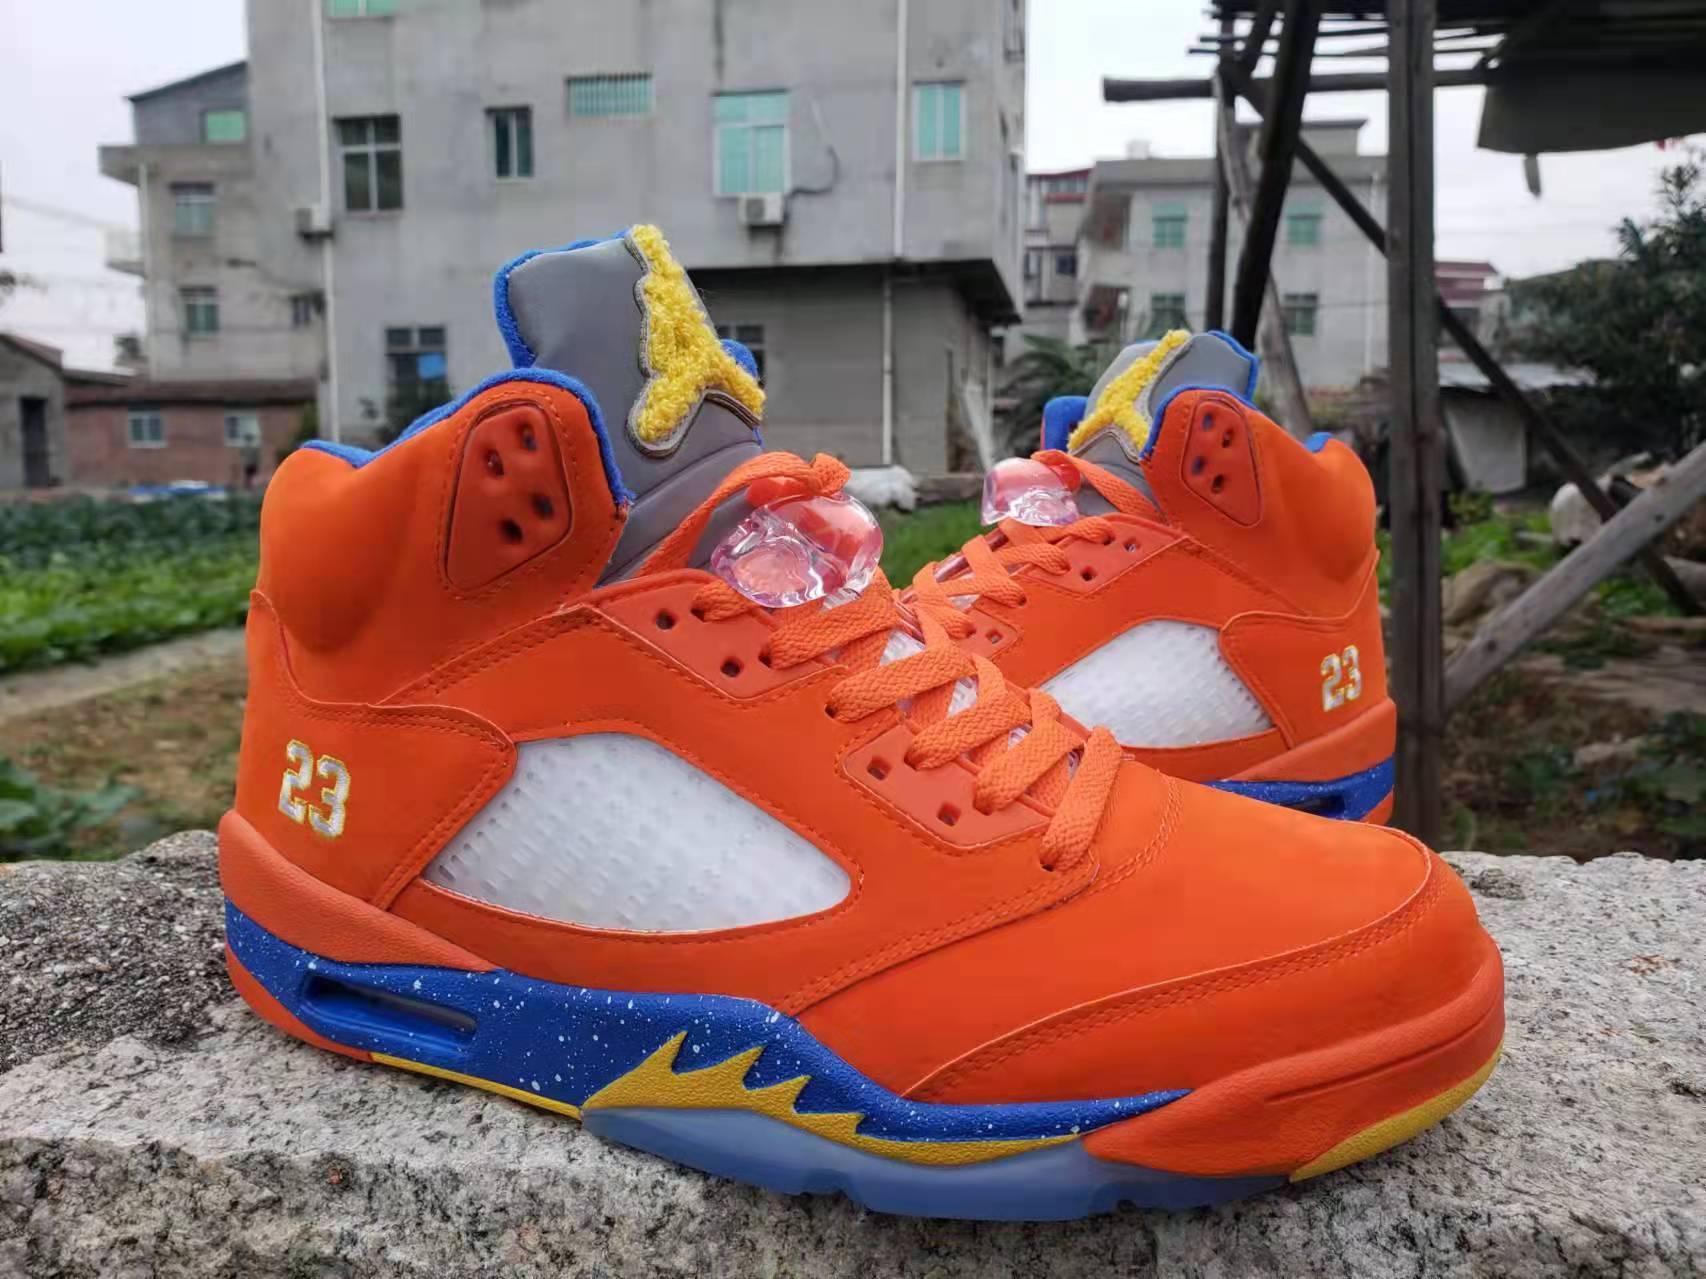 2022 Air Jordan 5 Orange Yellow Blue Shoes